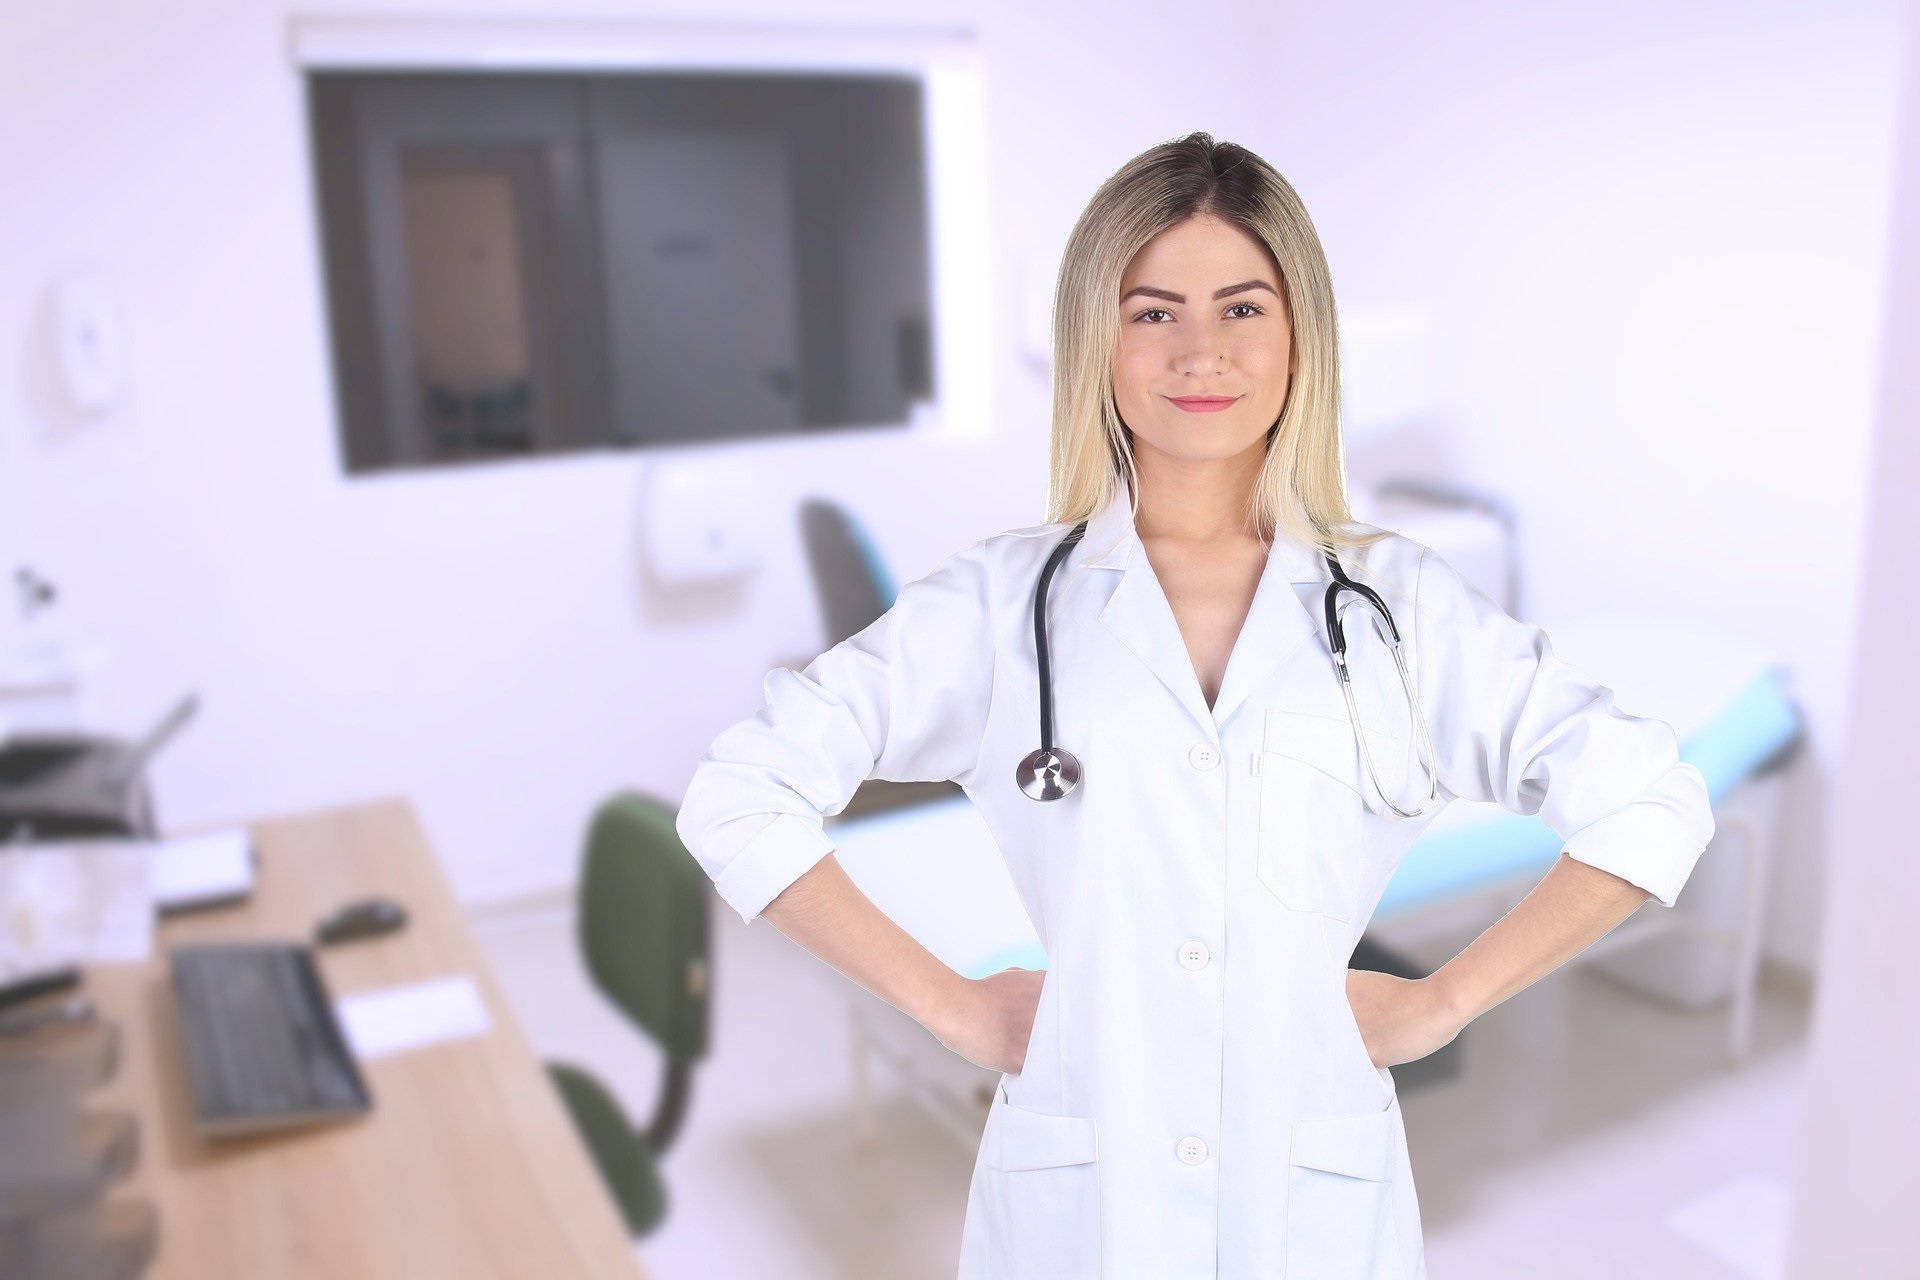 take charge woman doctor-Daniel Dan by Pixaby